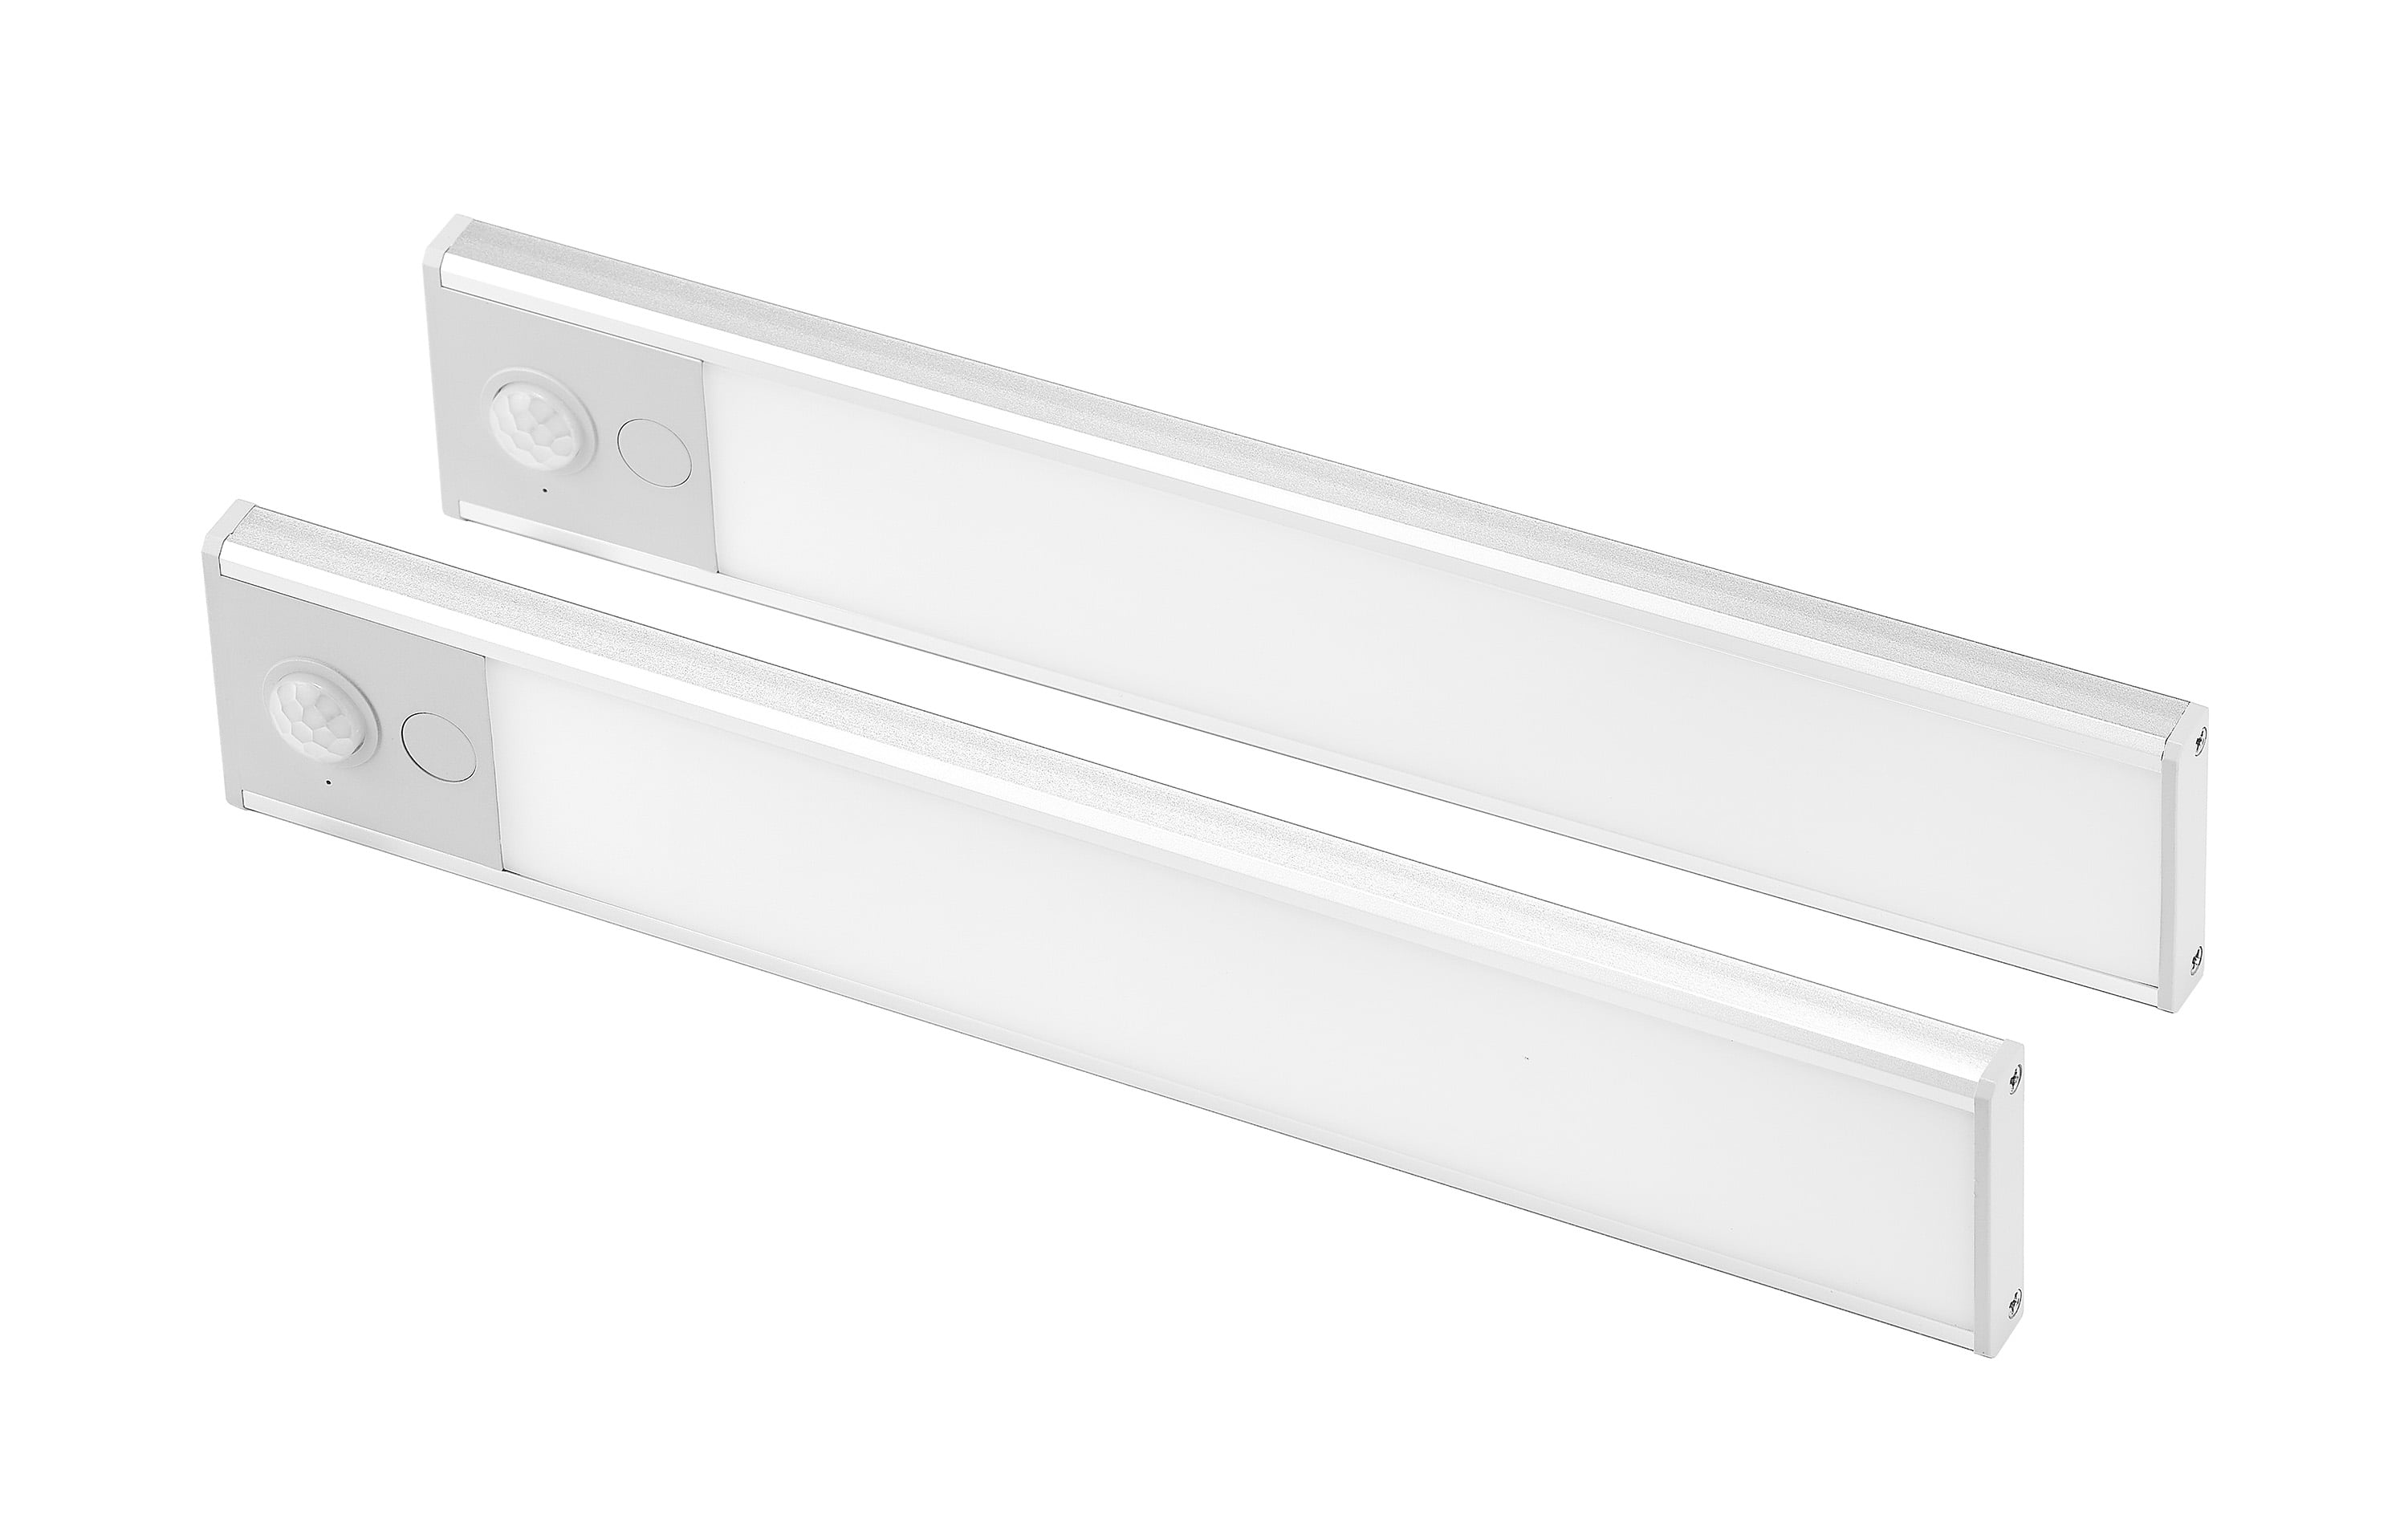 Black & Decker PureOptics™ LED Under Cabinet Puck Light Kit Warm